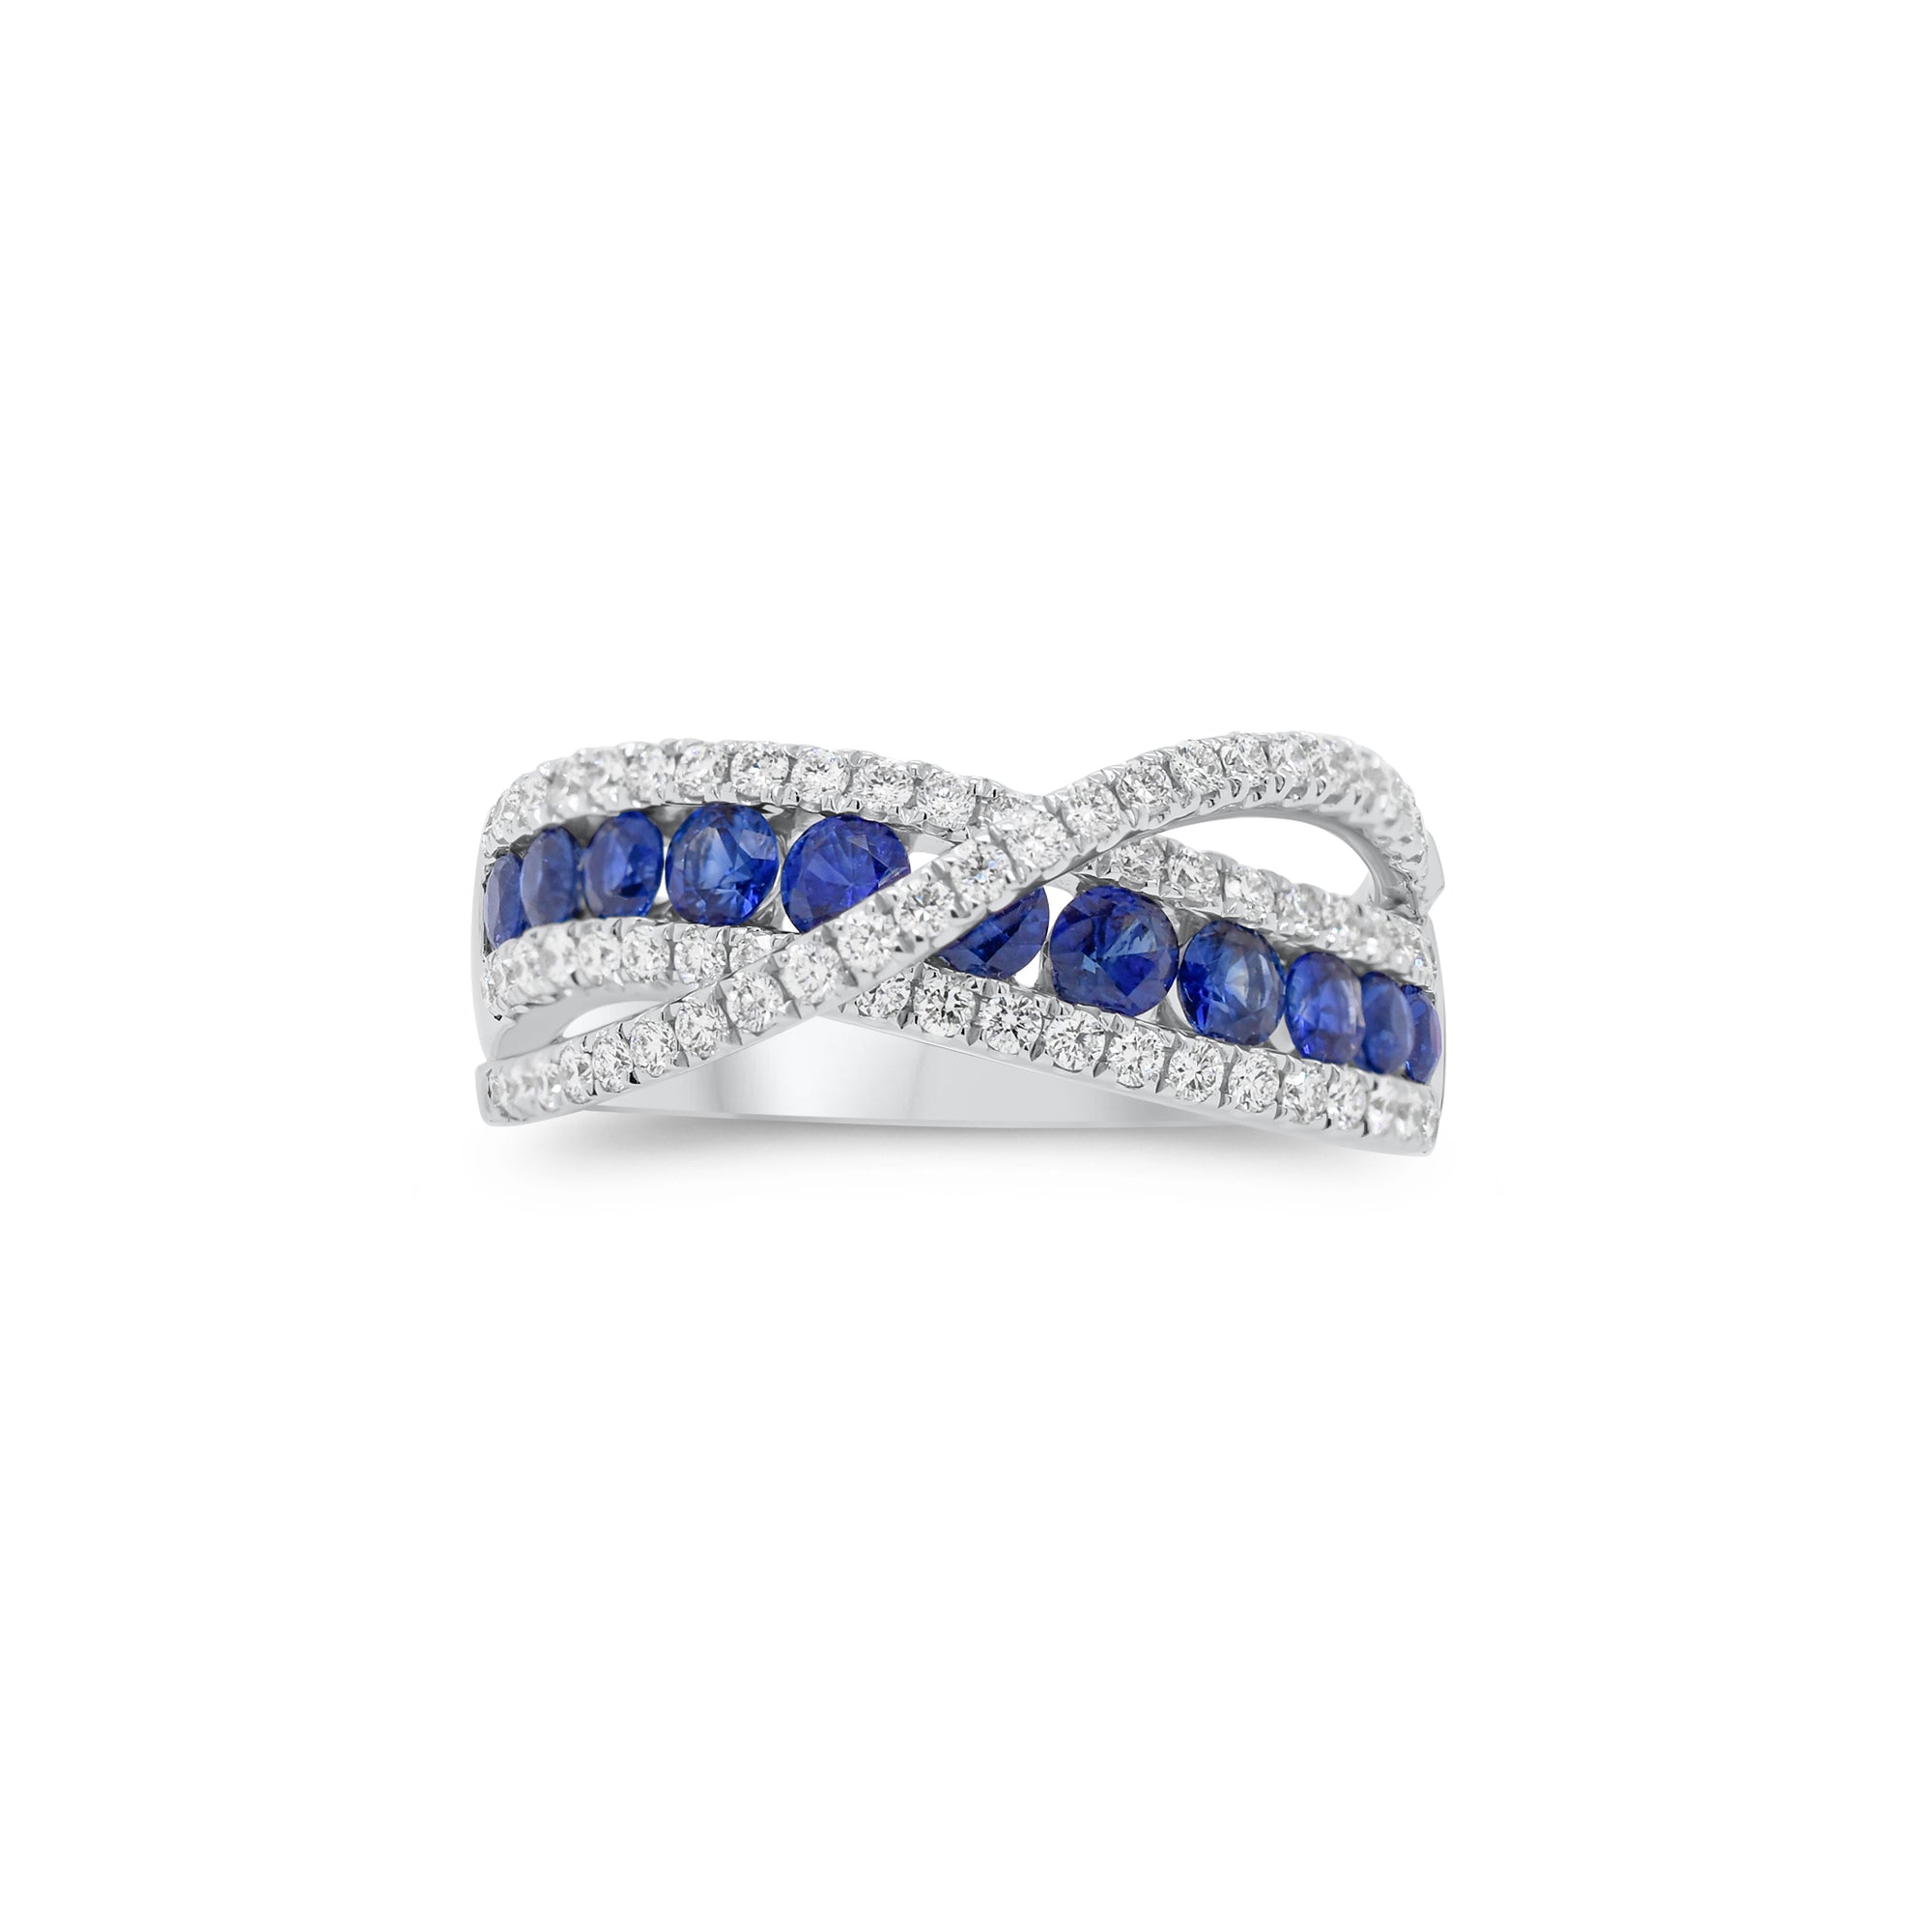 Sapphire & diamond crossover ring - 18K gold weighing 5.45 grams  - 69 round diamonds weighing 0.50 carats  - 11 sapphires weighing 0.84 carats